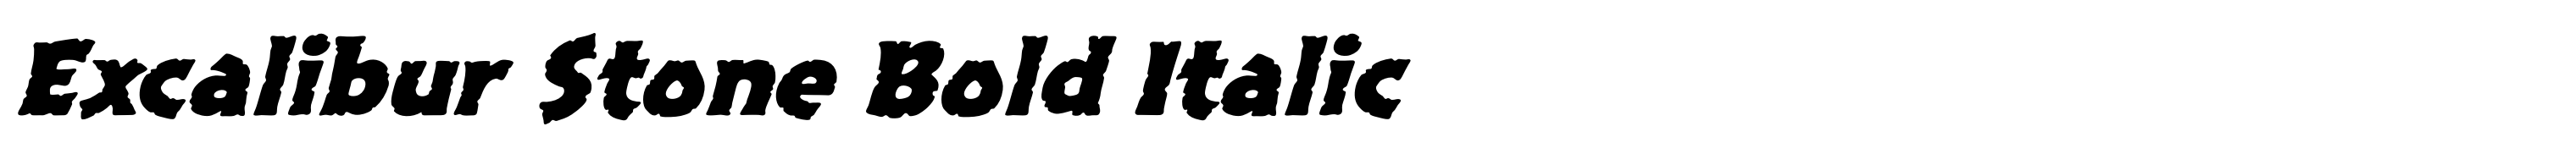 Excalibur Stone Bold Italic